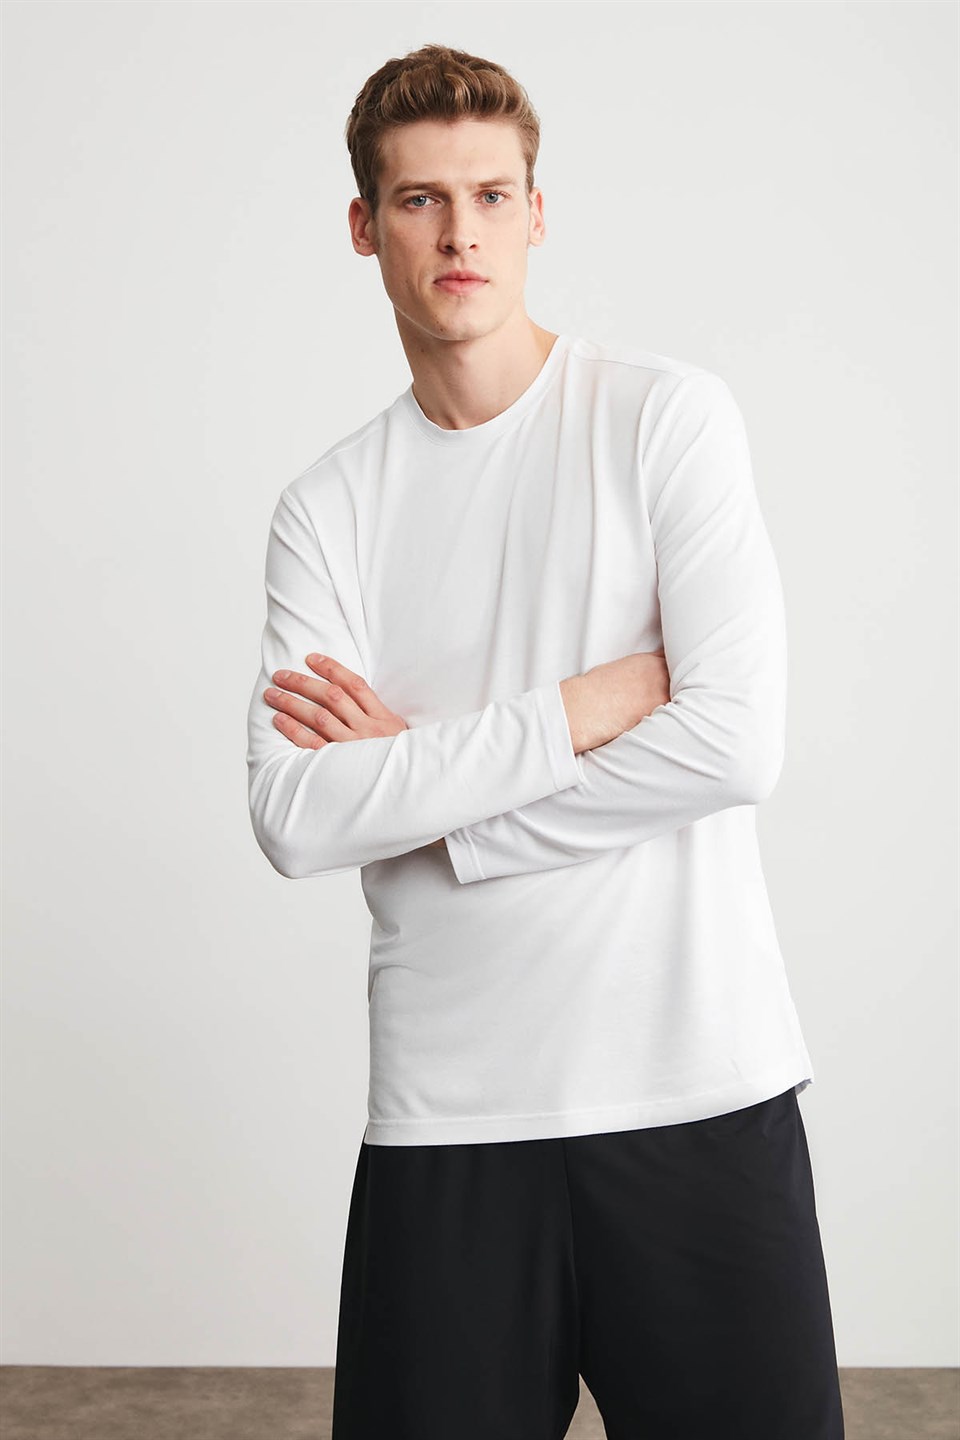 HUMMER Erkek Beyaz Düz Renk Yuvarlak Yaka Comfort Fit T-Shirt